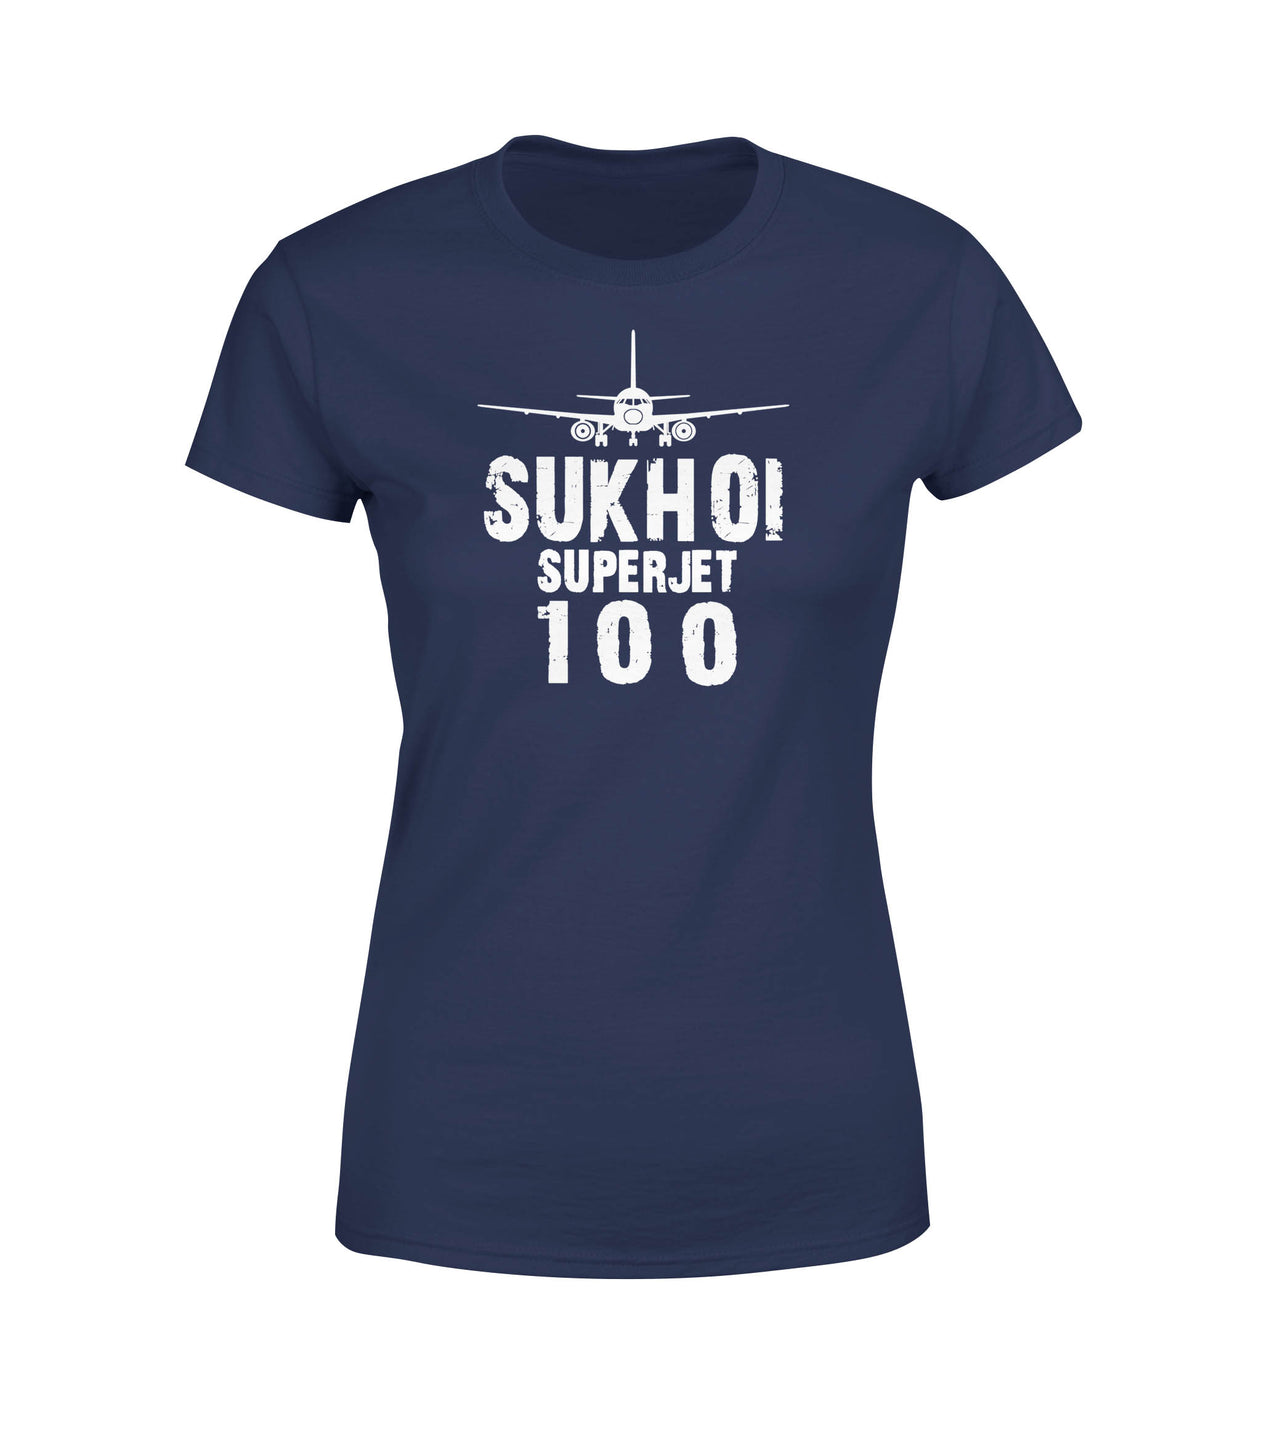 Sukhoi Superjet 100 & Plane Designed Women T-Shirts